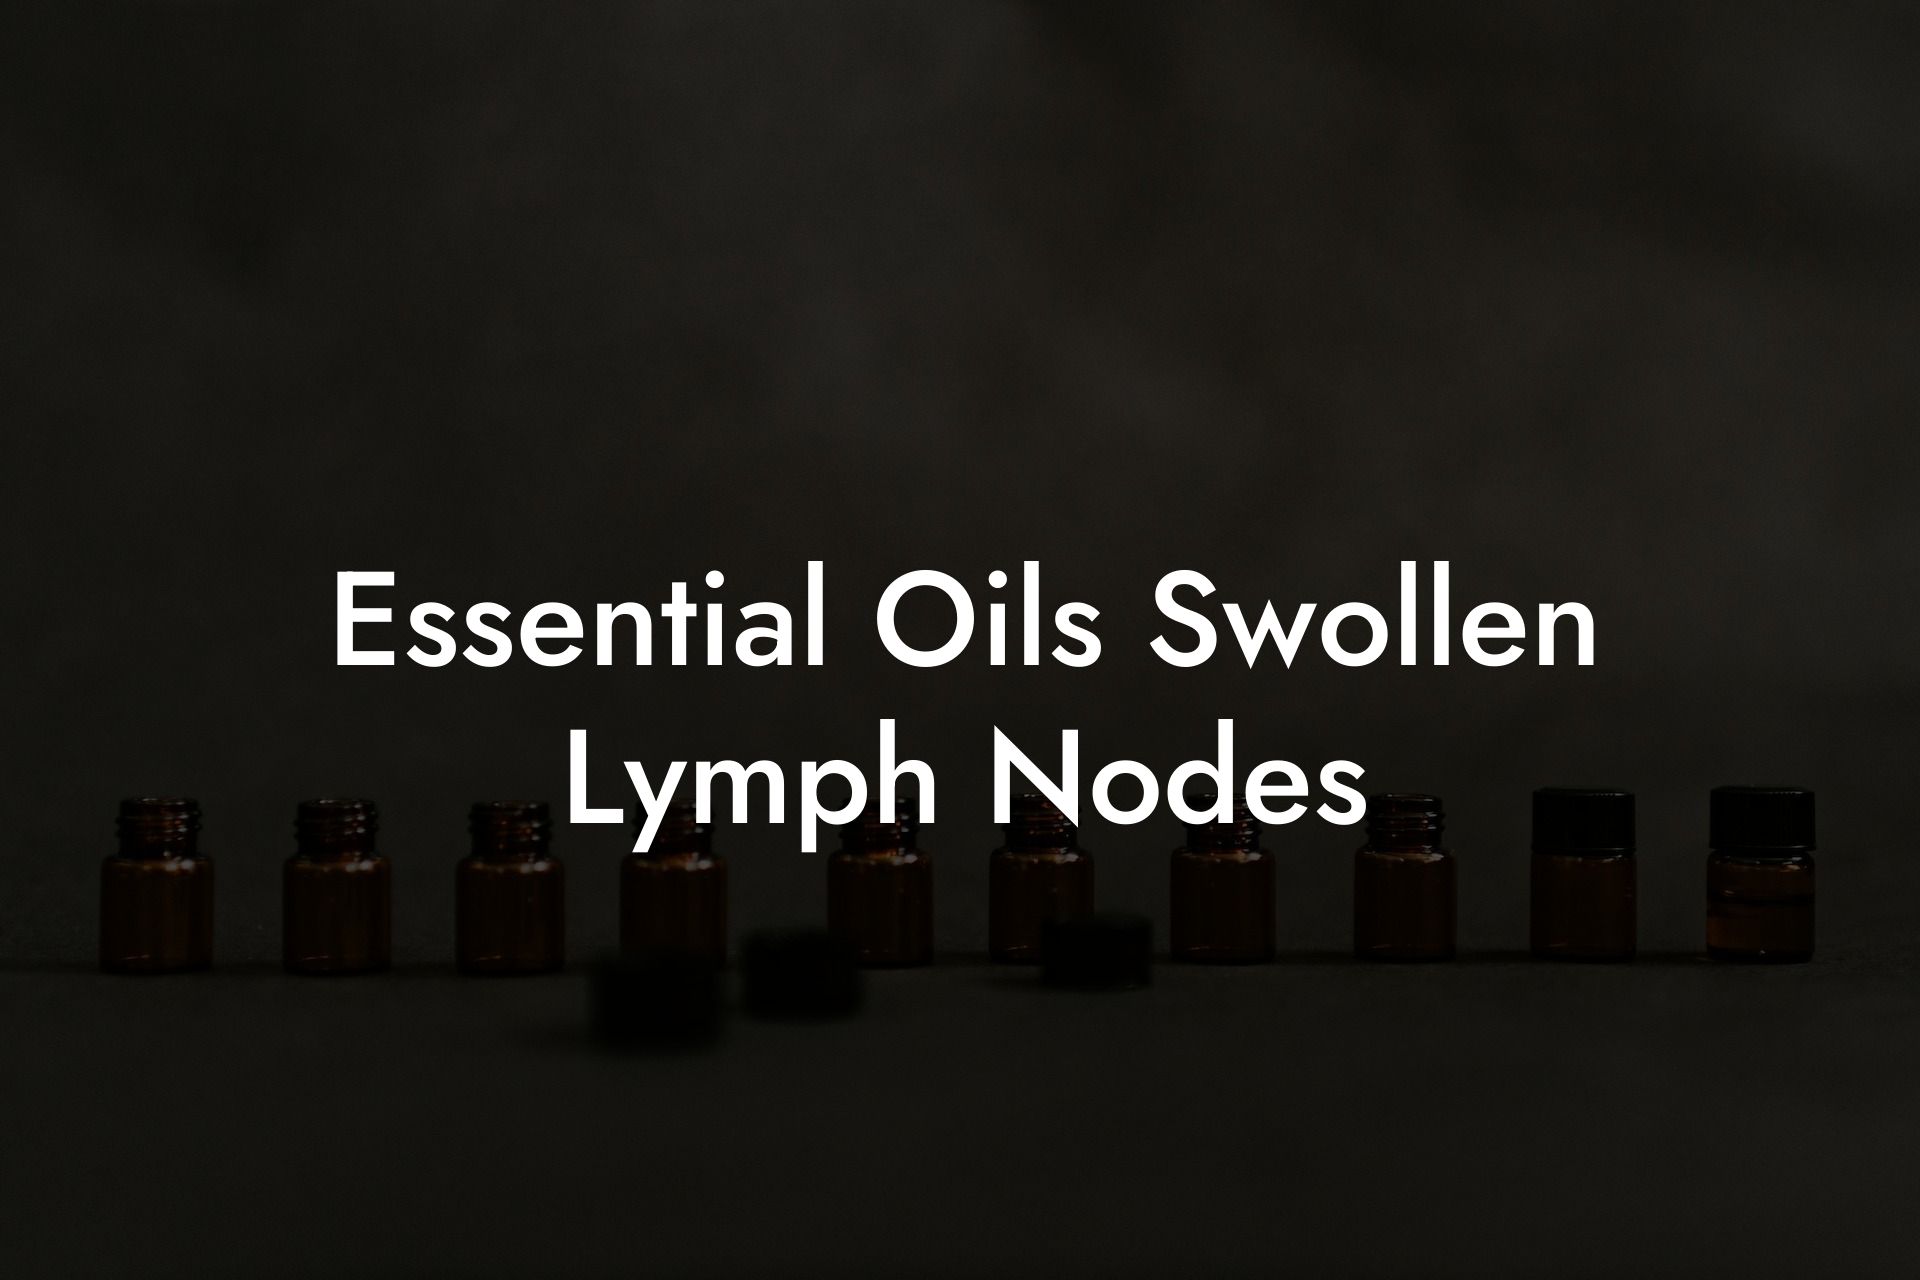 Essential Oils Swollen Lymph Nodes